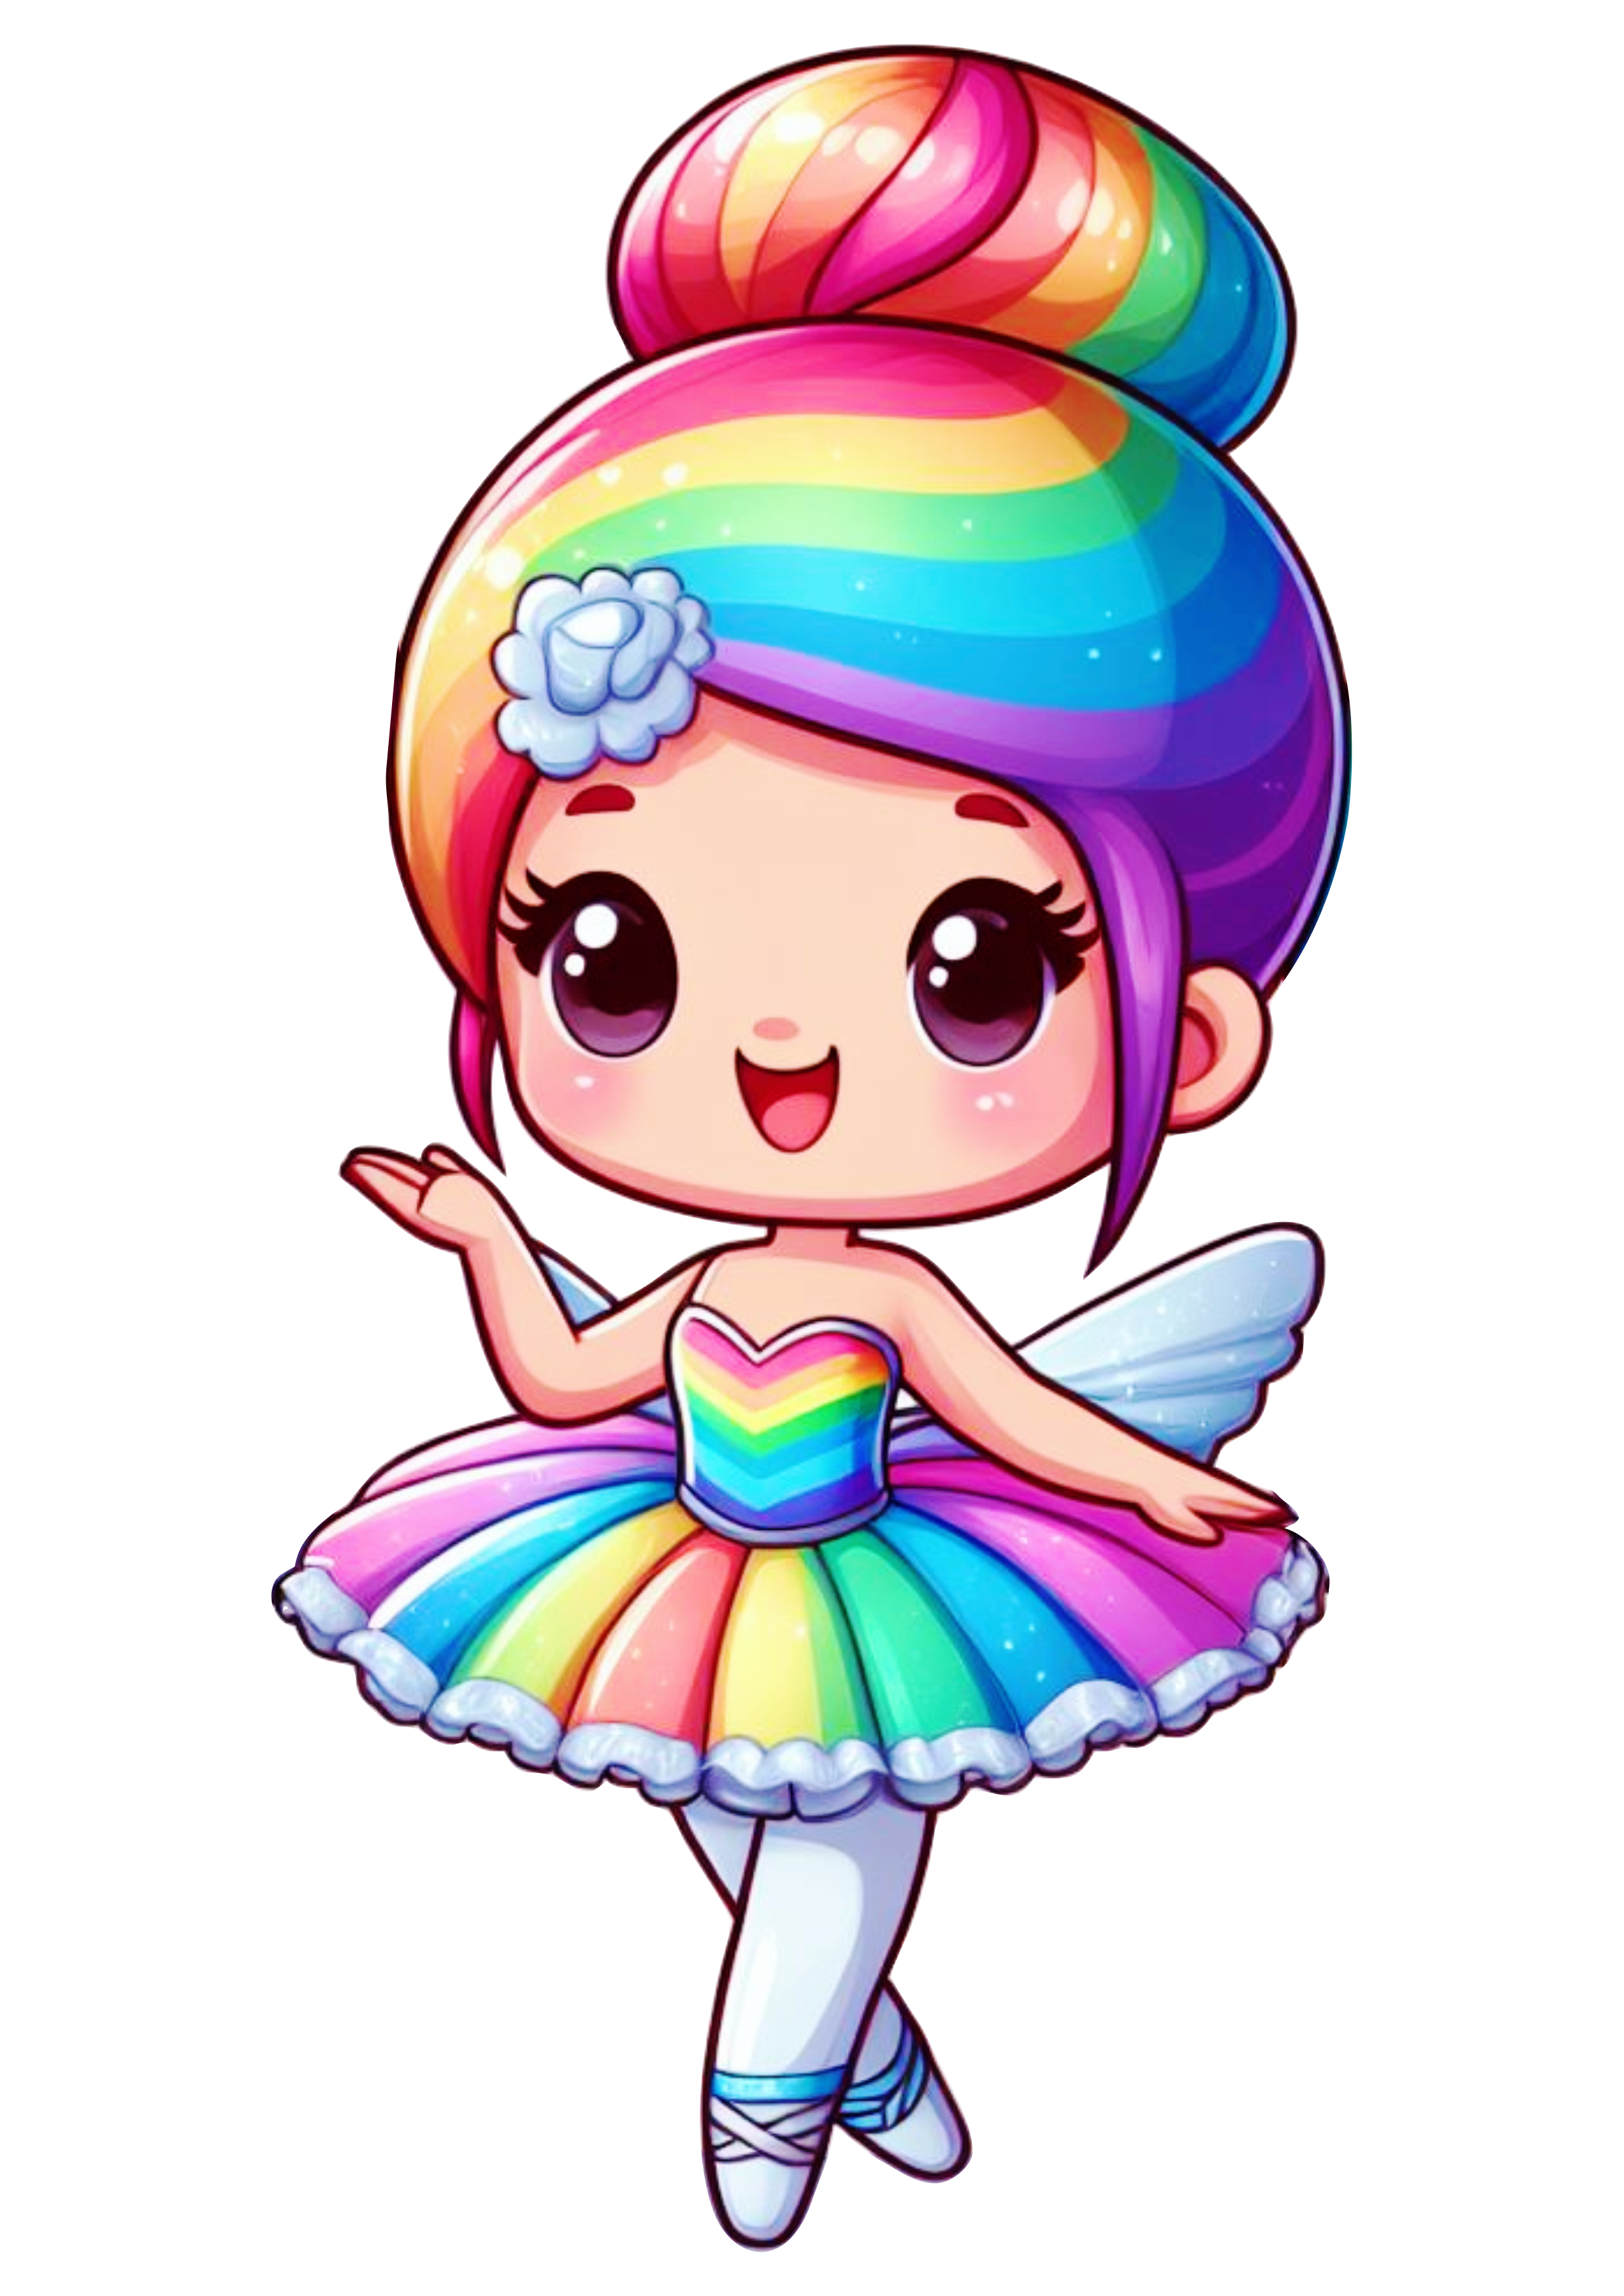 Bailarina menina com roupa colorida arco-íris desenho infantil png image